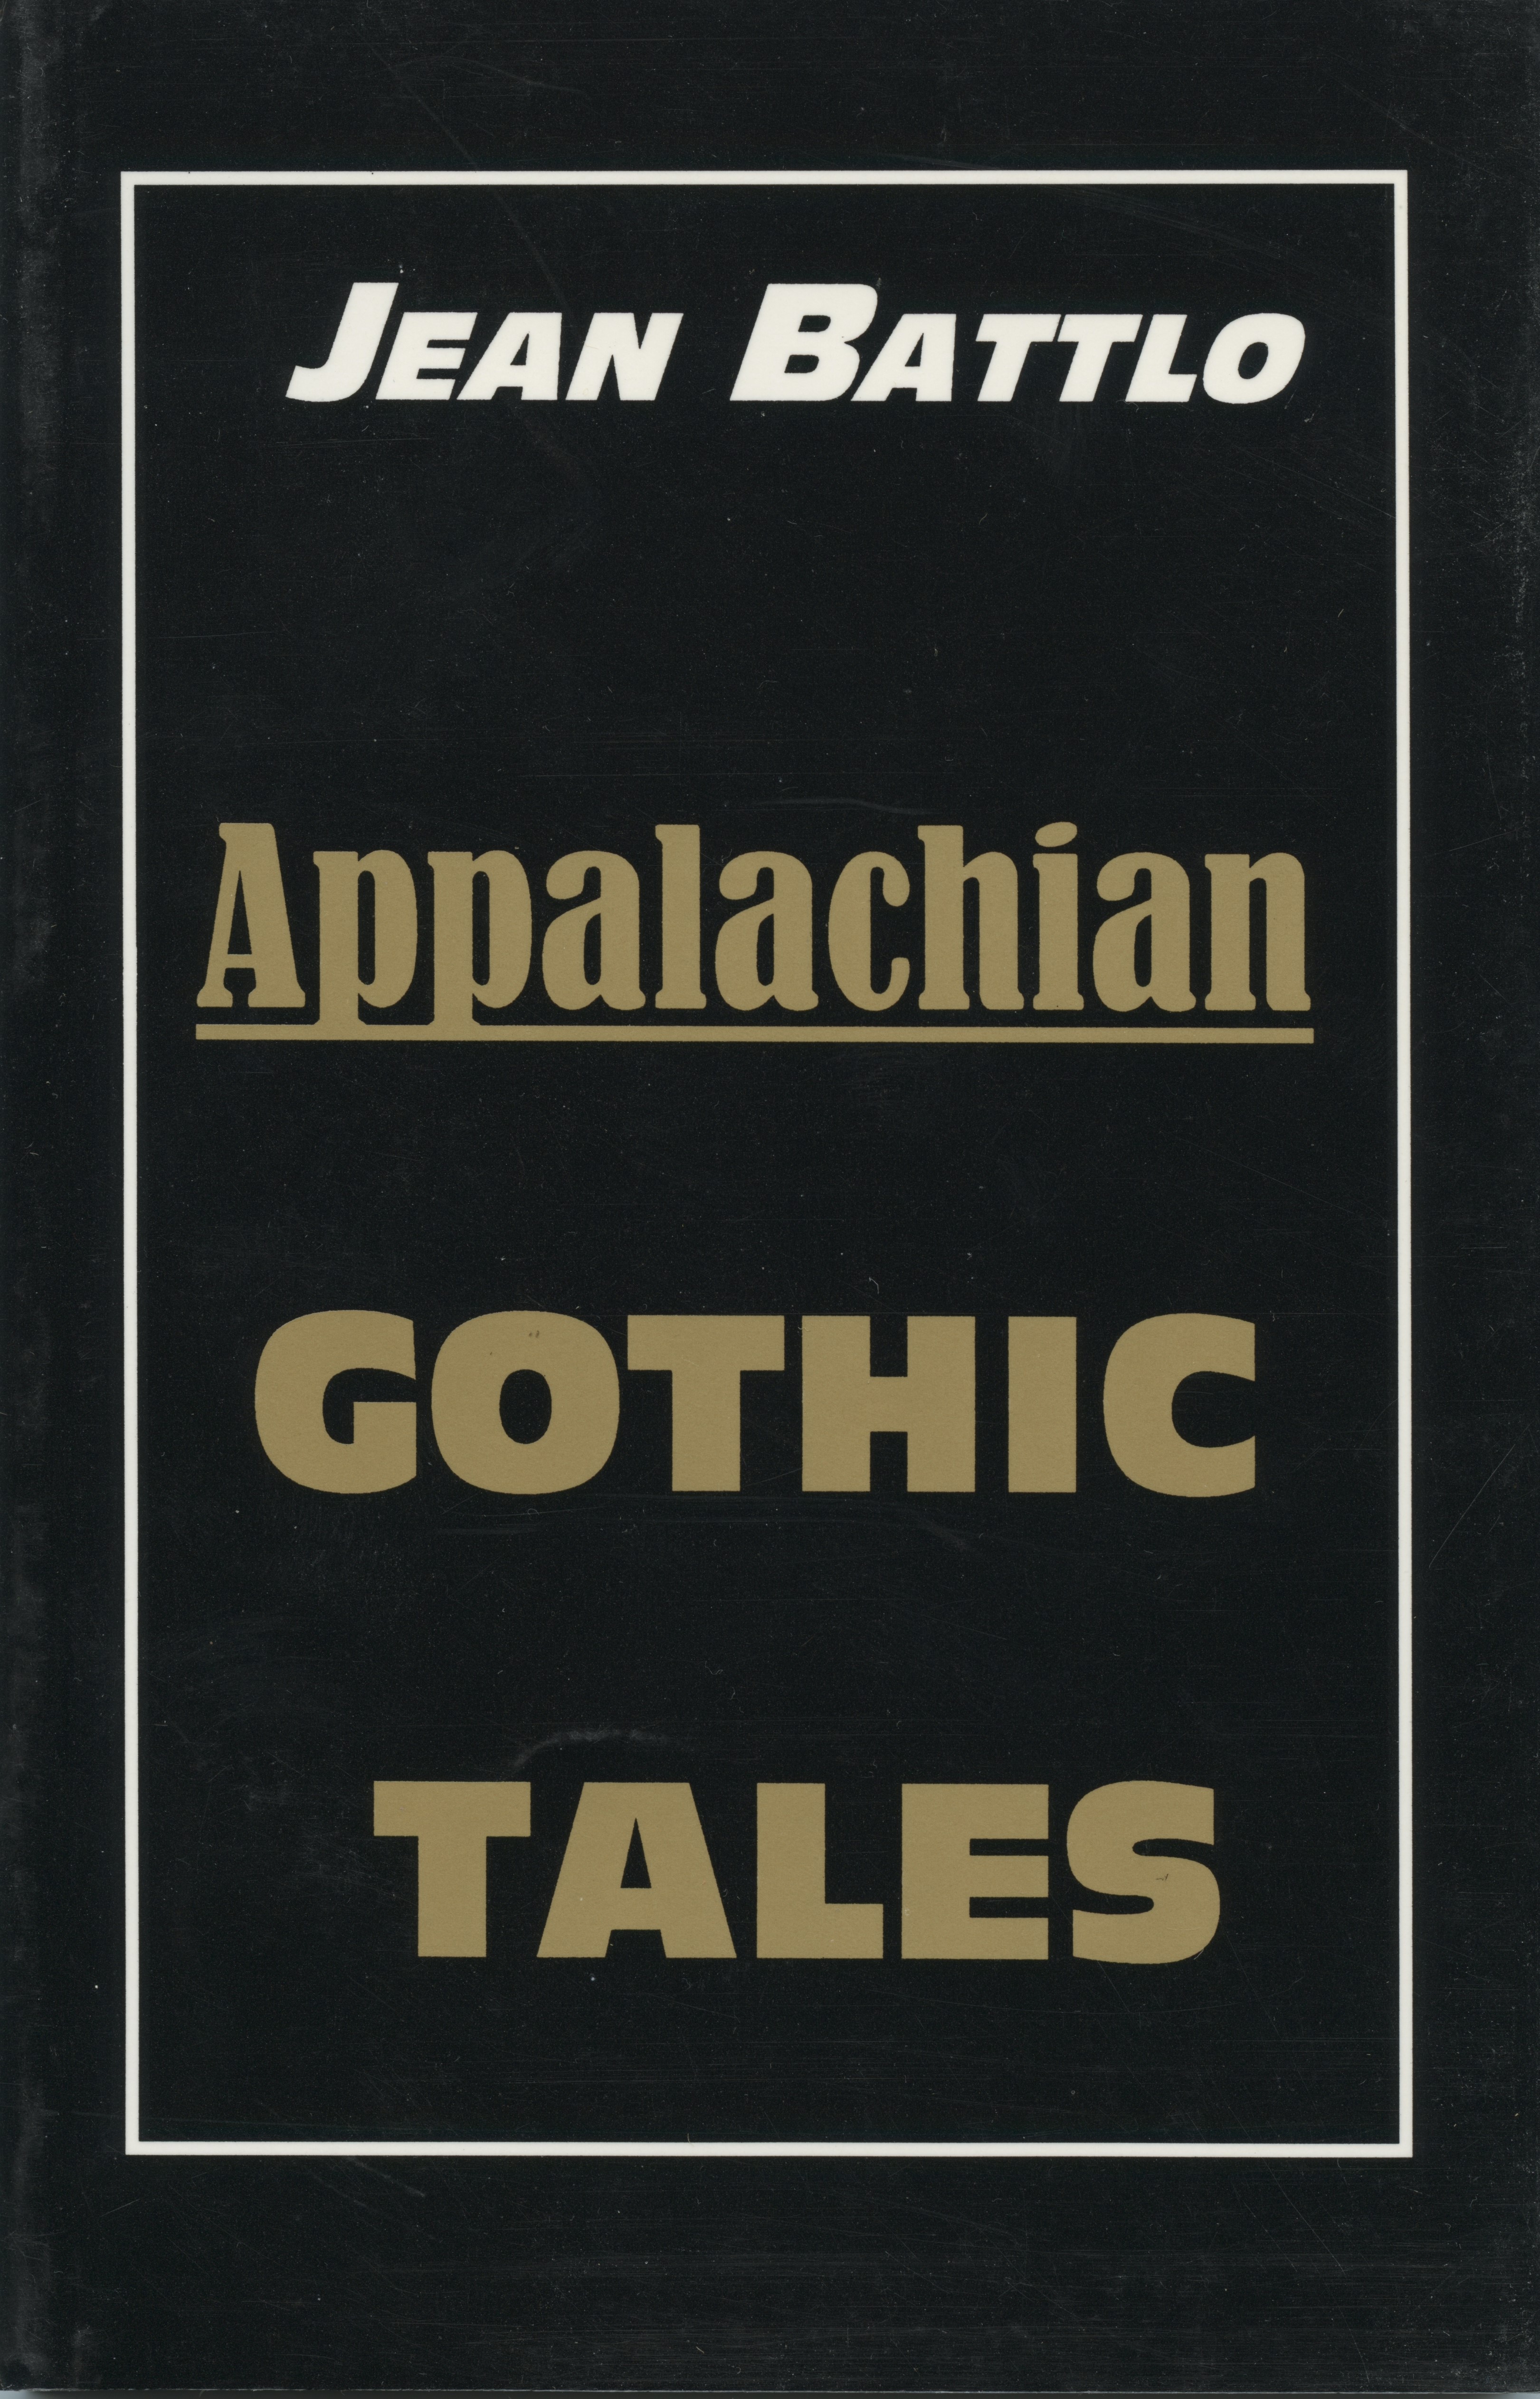 Appalachian Gothic Tales